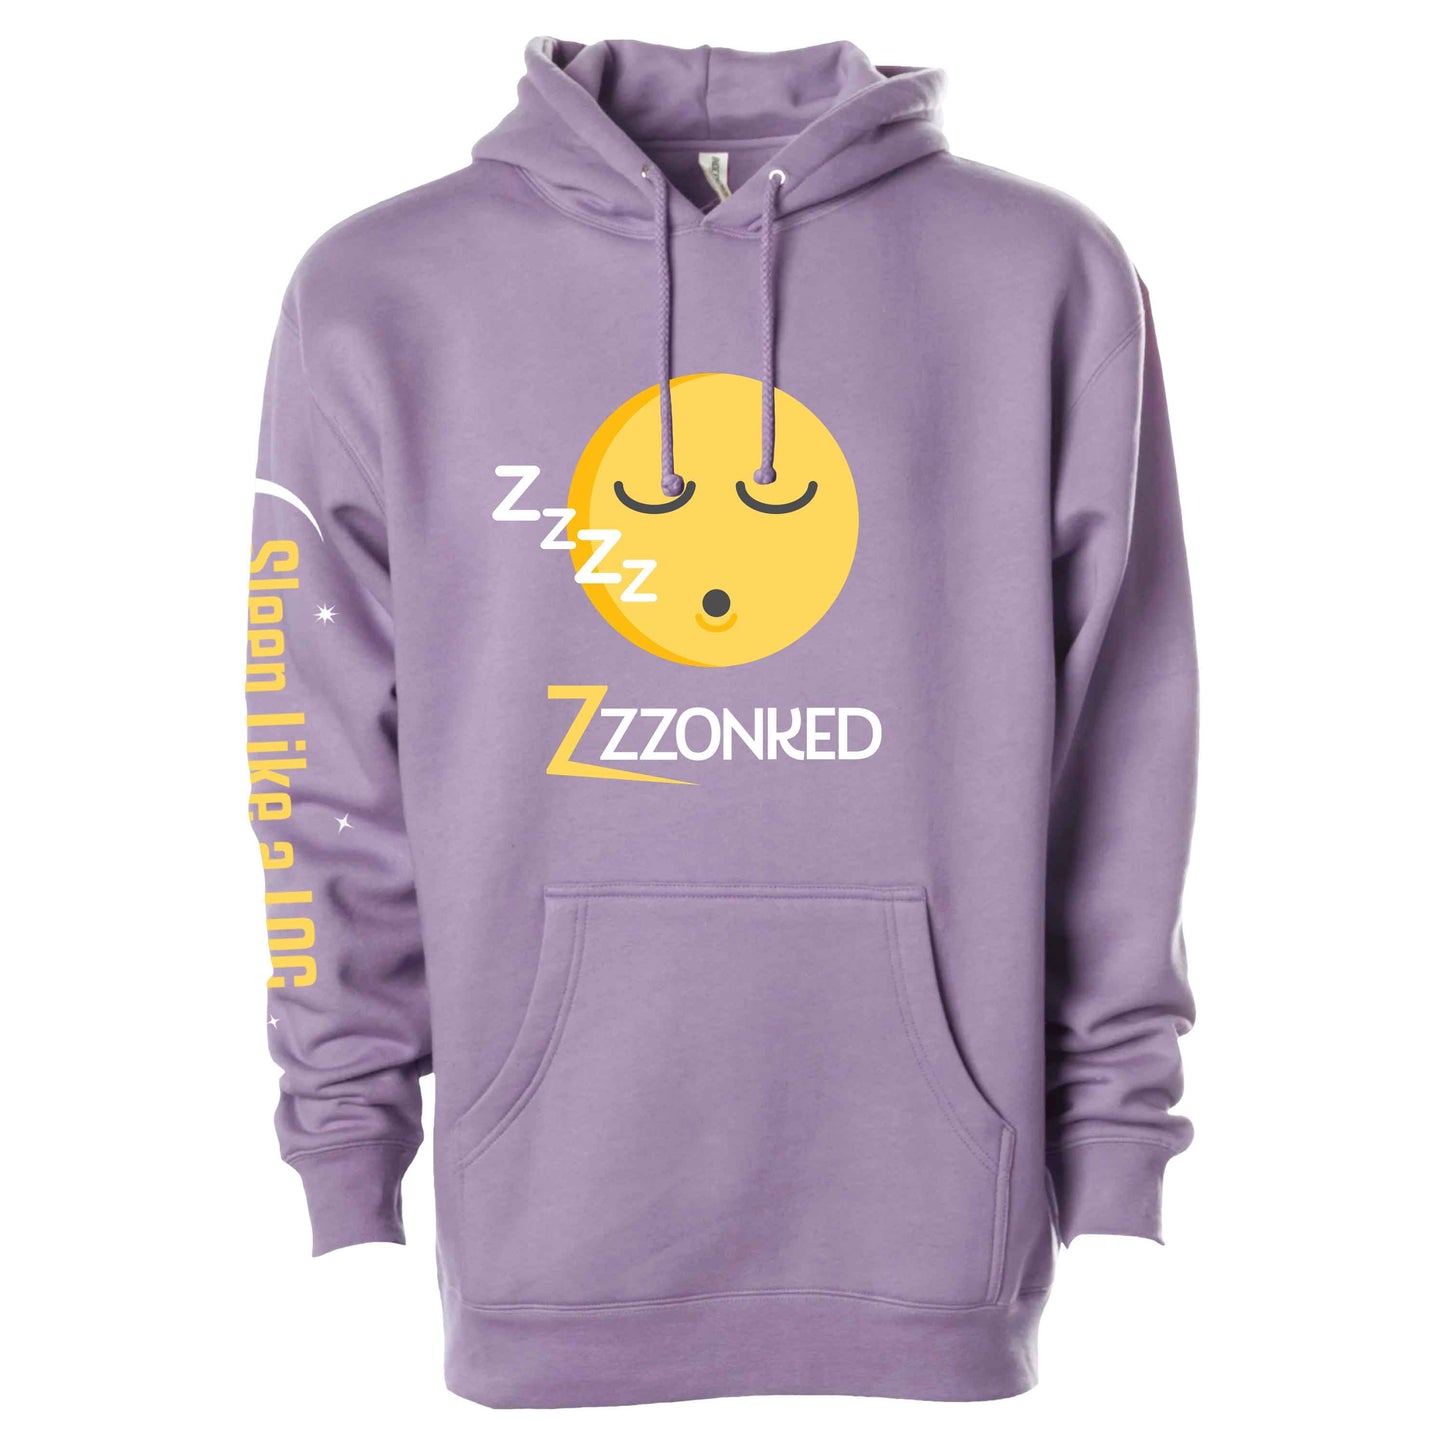 Zzzonked - Sleep like a Log - Pullover Hoodie - Plum